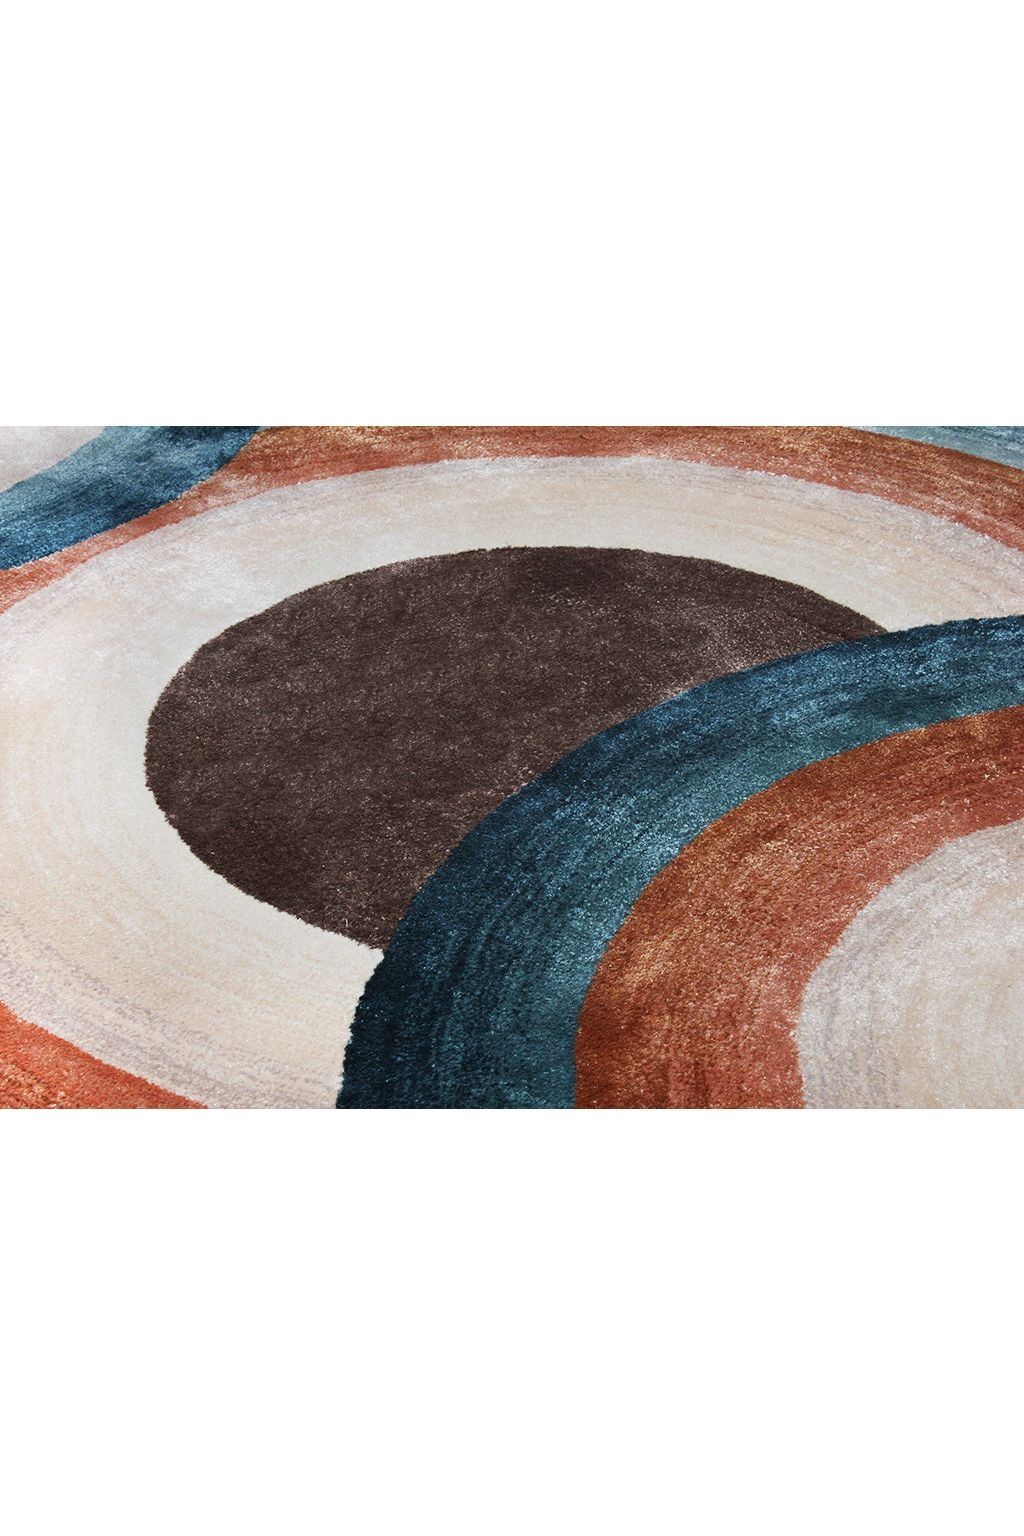 #Turkish_Carpets_Rugs# #Modern_Carpets# #Abrash_Carpets#Circle 001-N